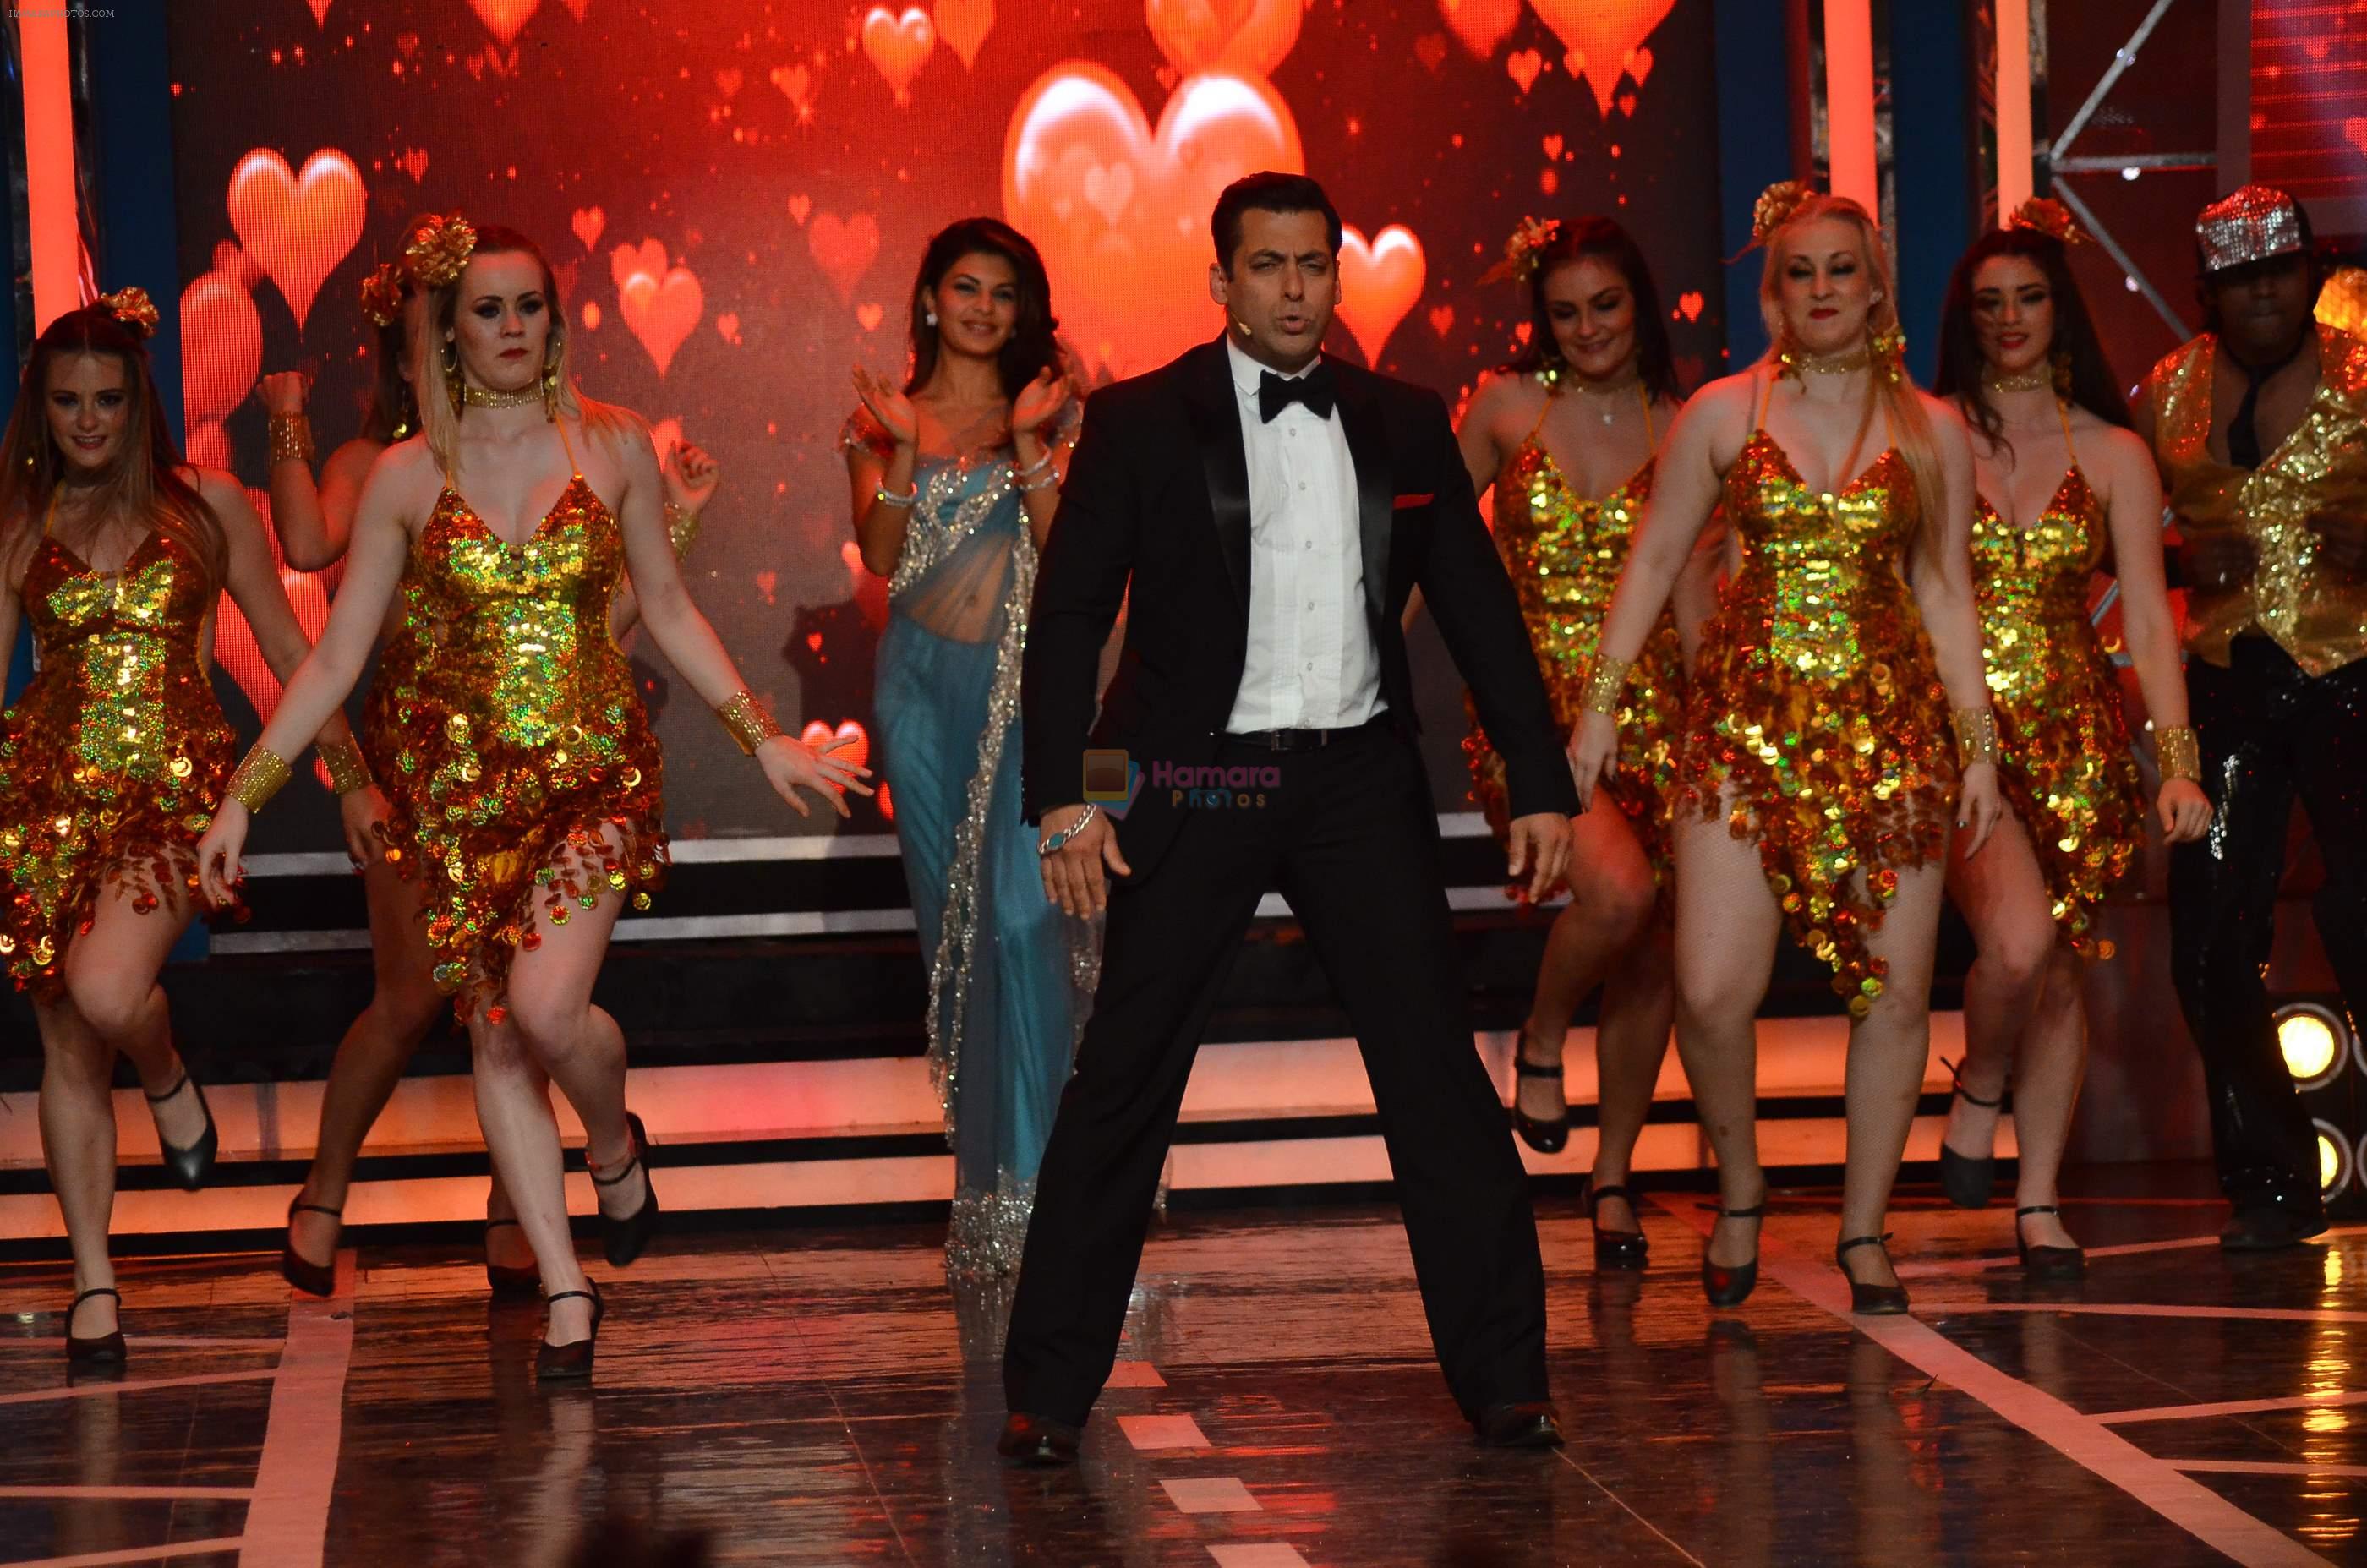 Salman Khan at Salman's last Episode on Bigg Boss 8 on 3rd Jan 2015